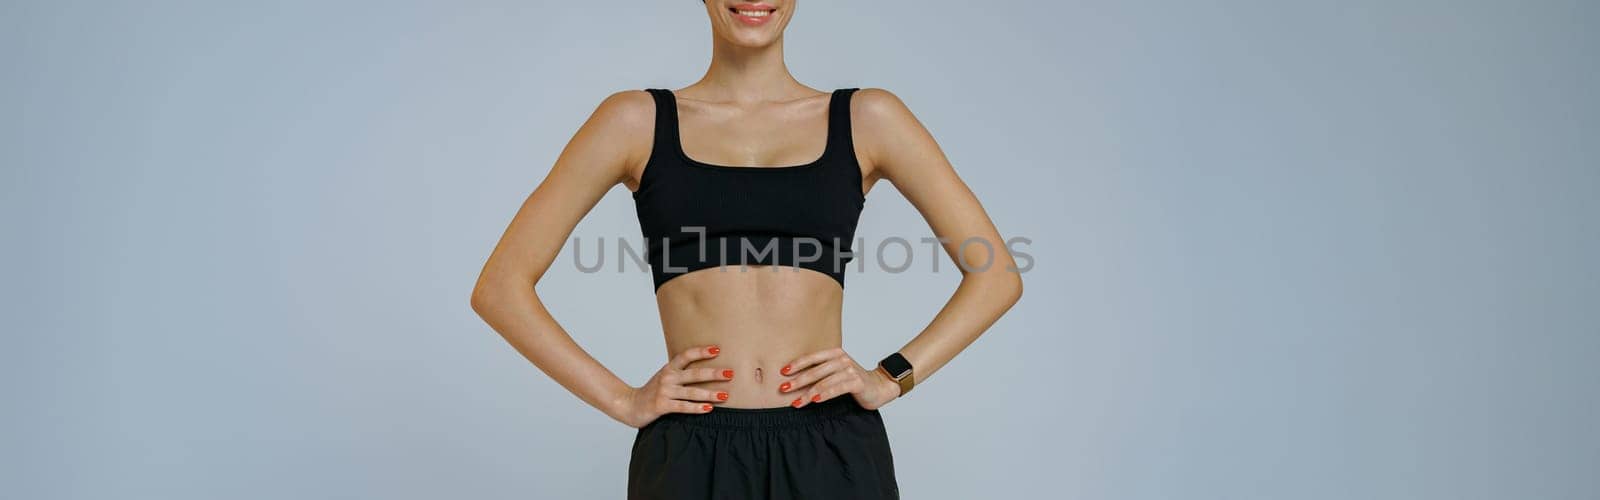 Portrait of smiling fitness woman wearing sportswear looking at camera on studio background by Yaroslav_astakhov